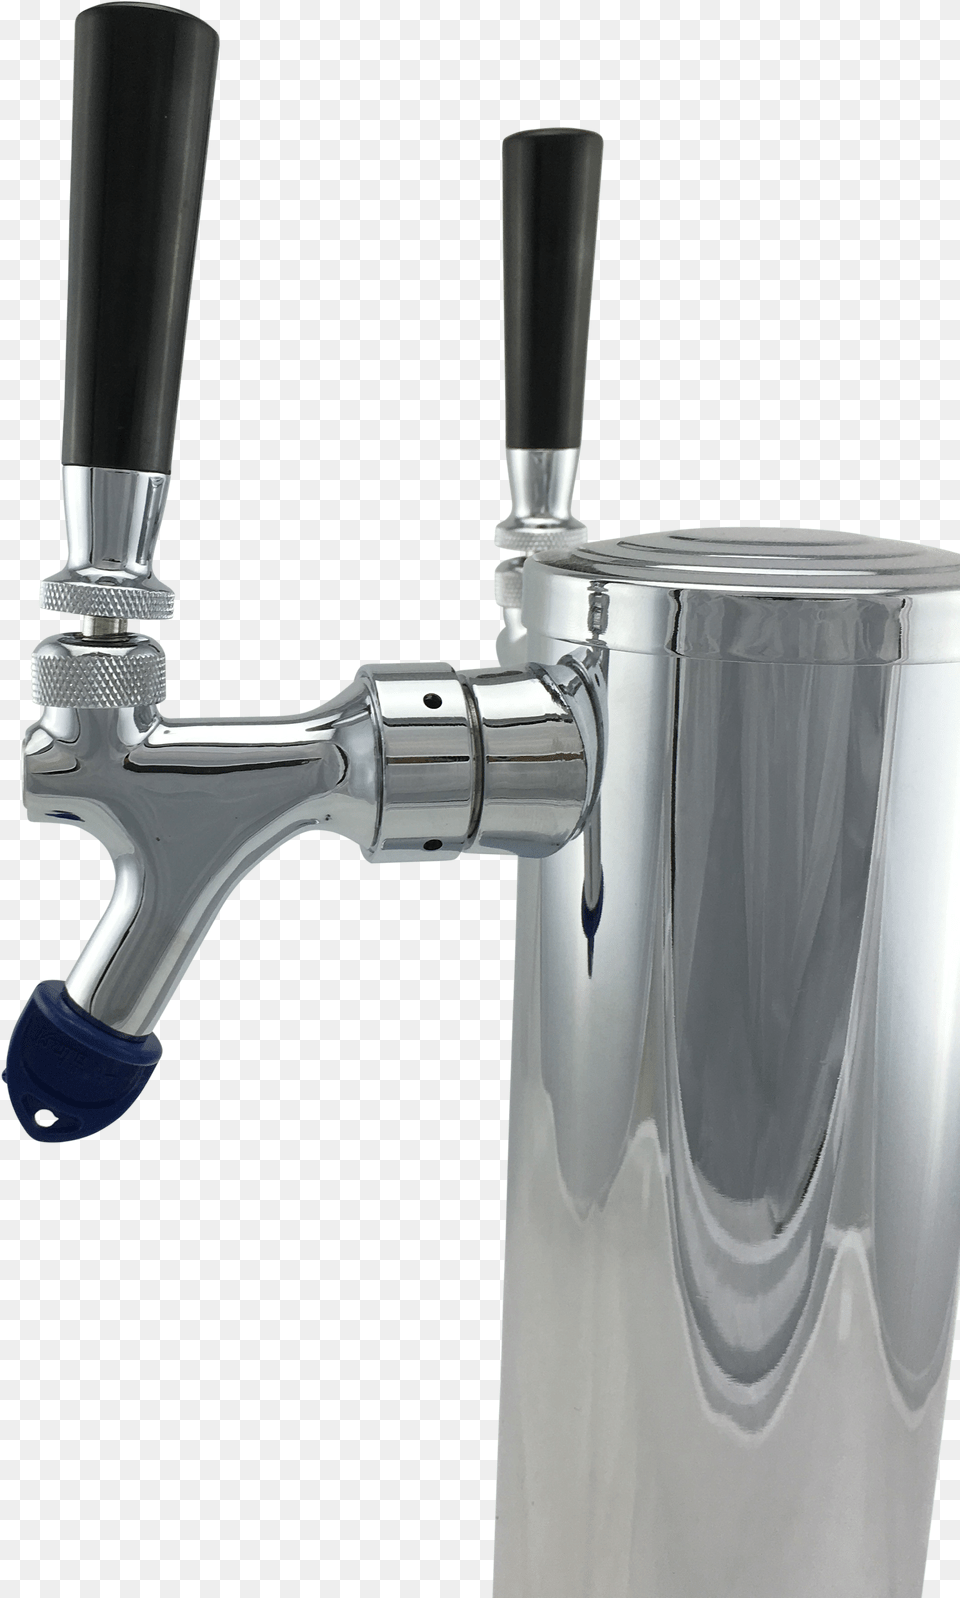 Beer Faucet Brush Cap, Tap, Cup, Sink, Sink Faucet Png Image